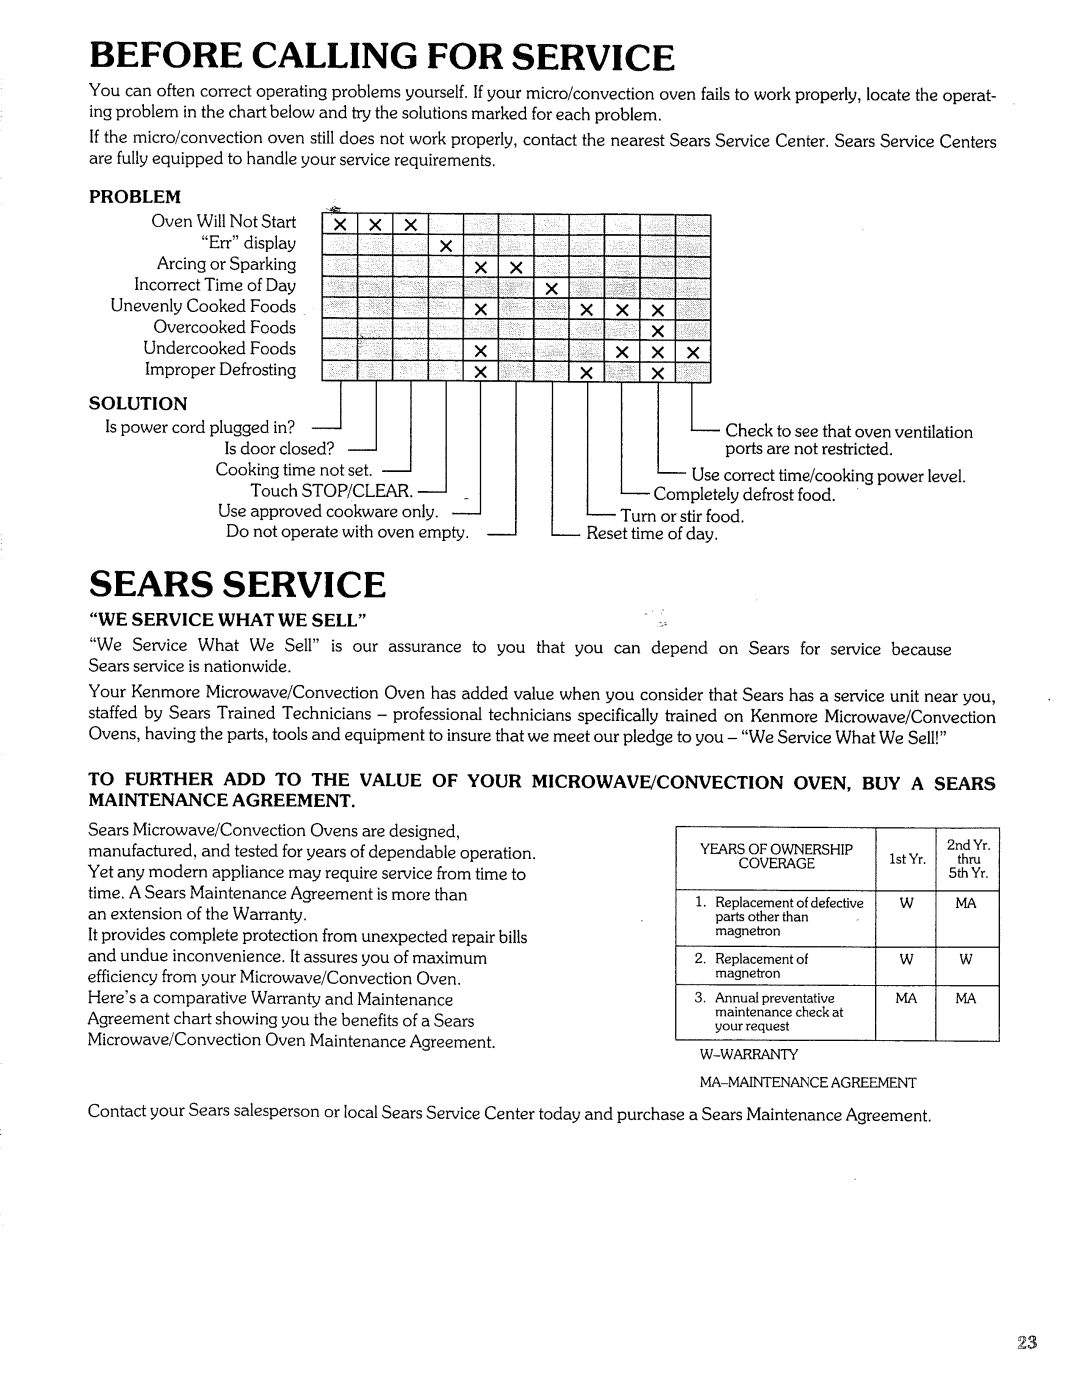 Sears Microwave Oven manual Before Calling For Service, Sears Service, il i i!i!!iiiiii 